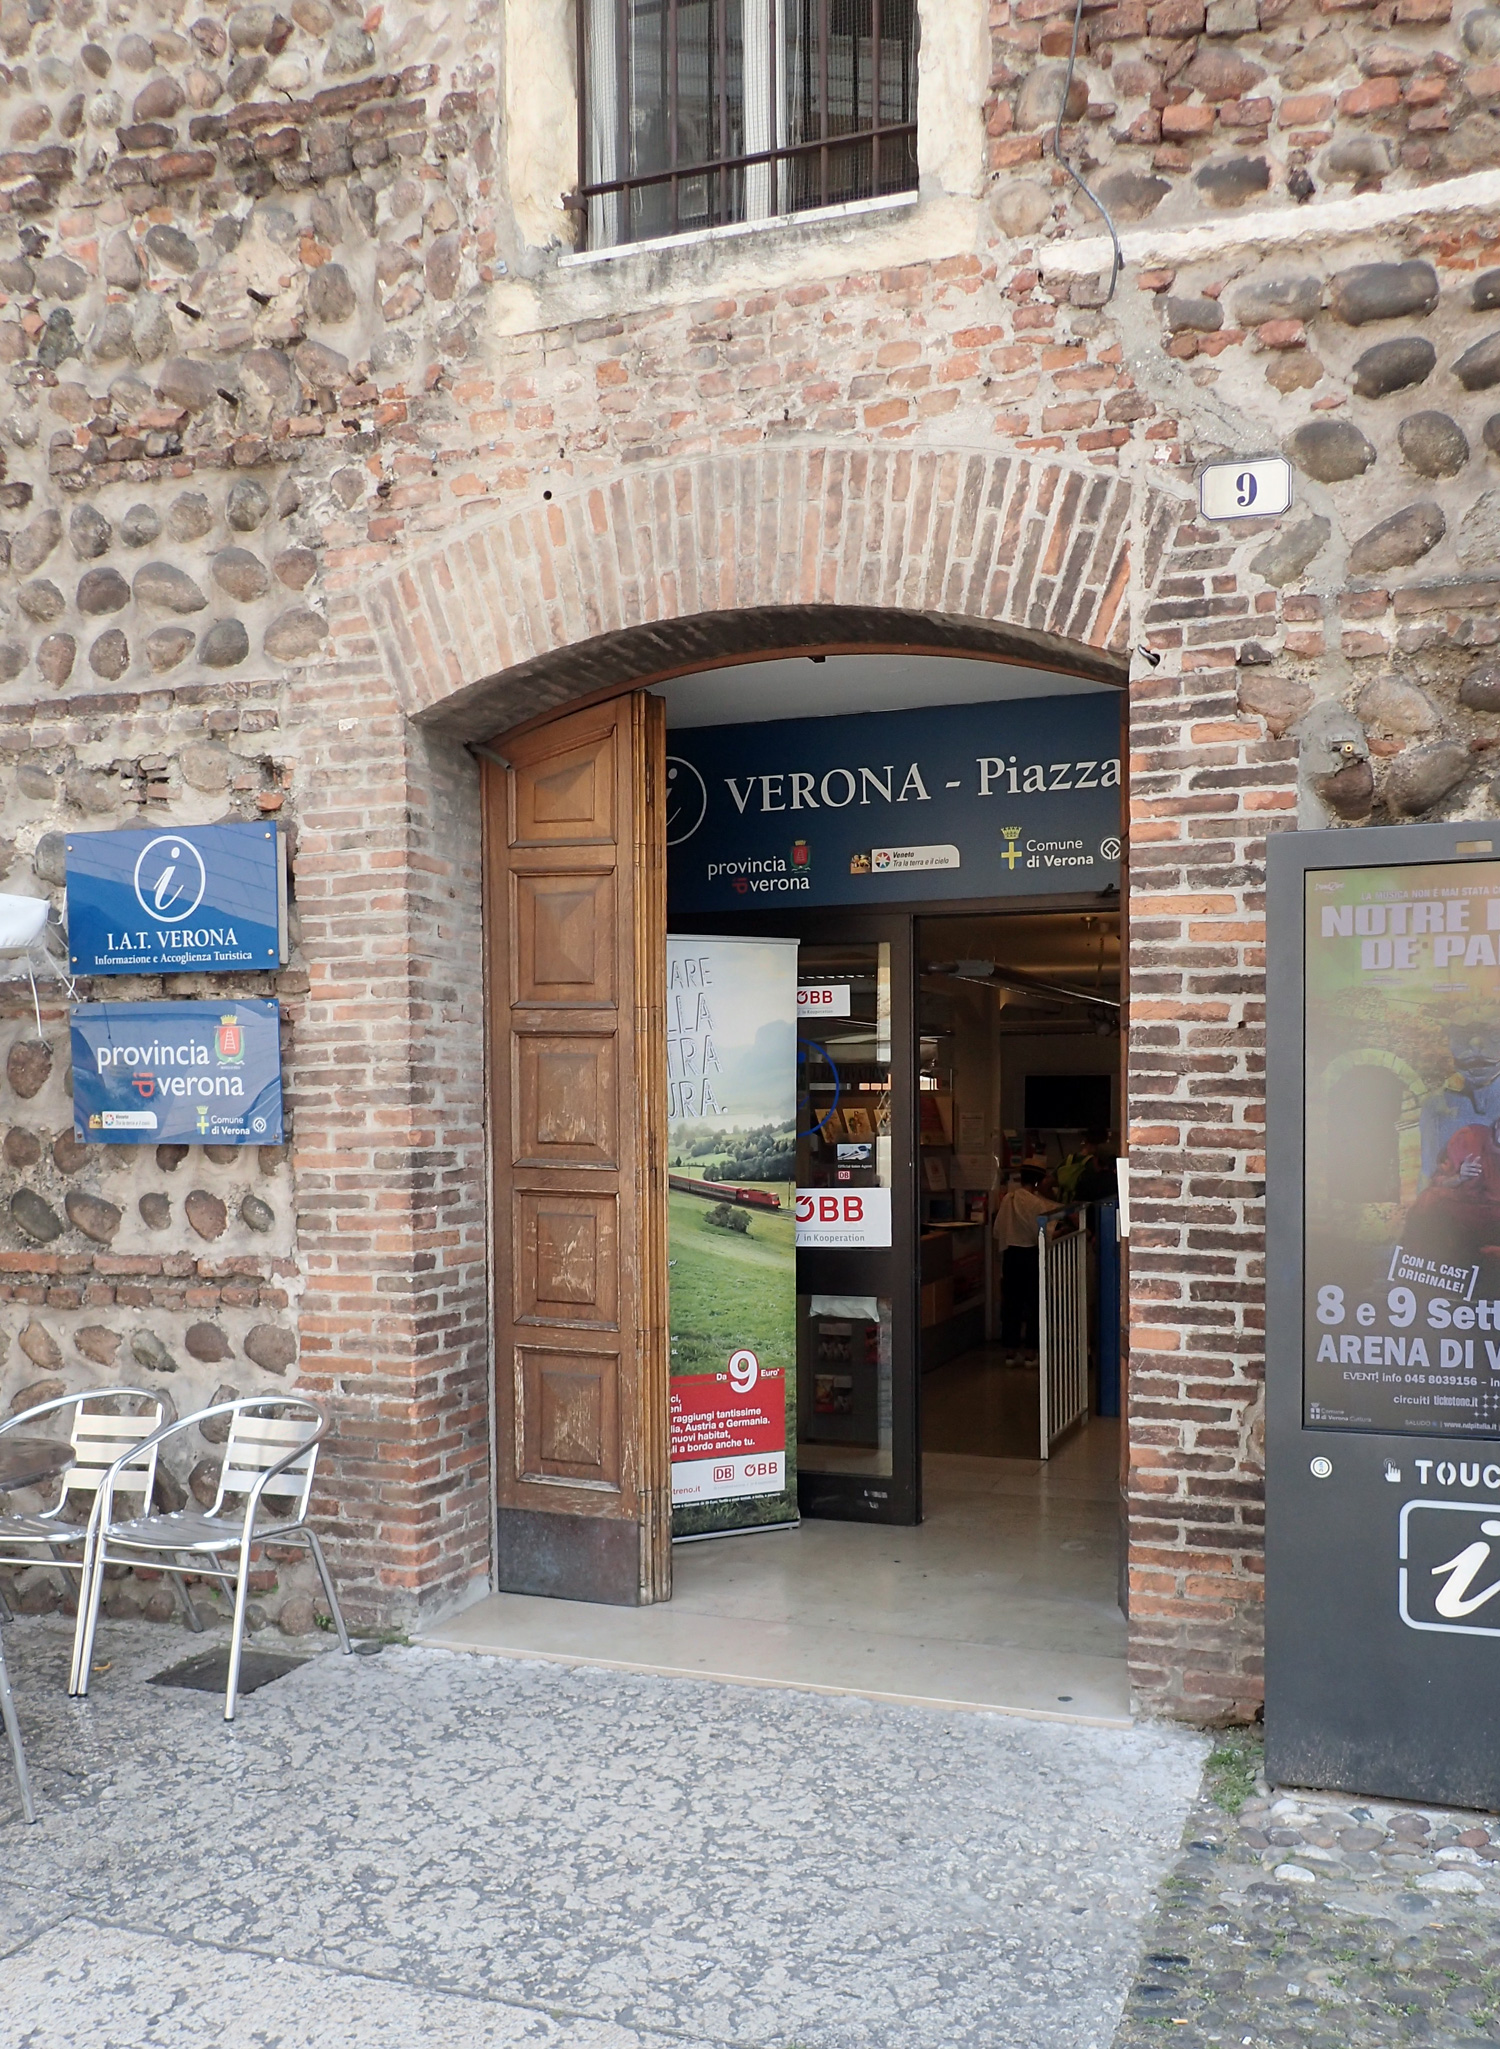 Turistinformationen i Verona